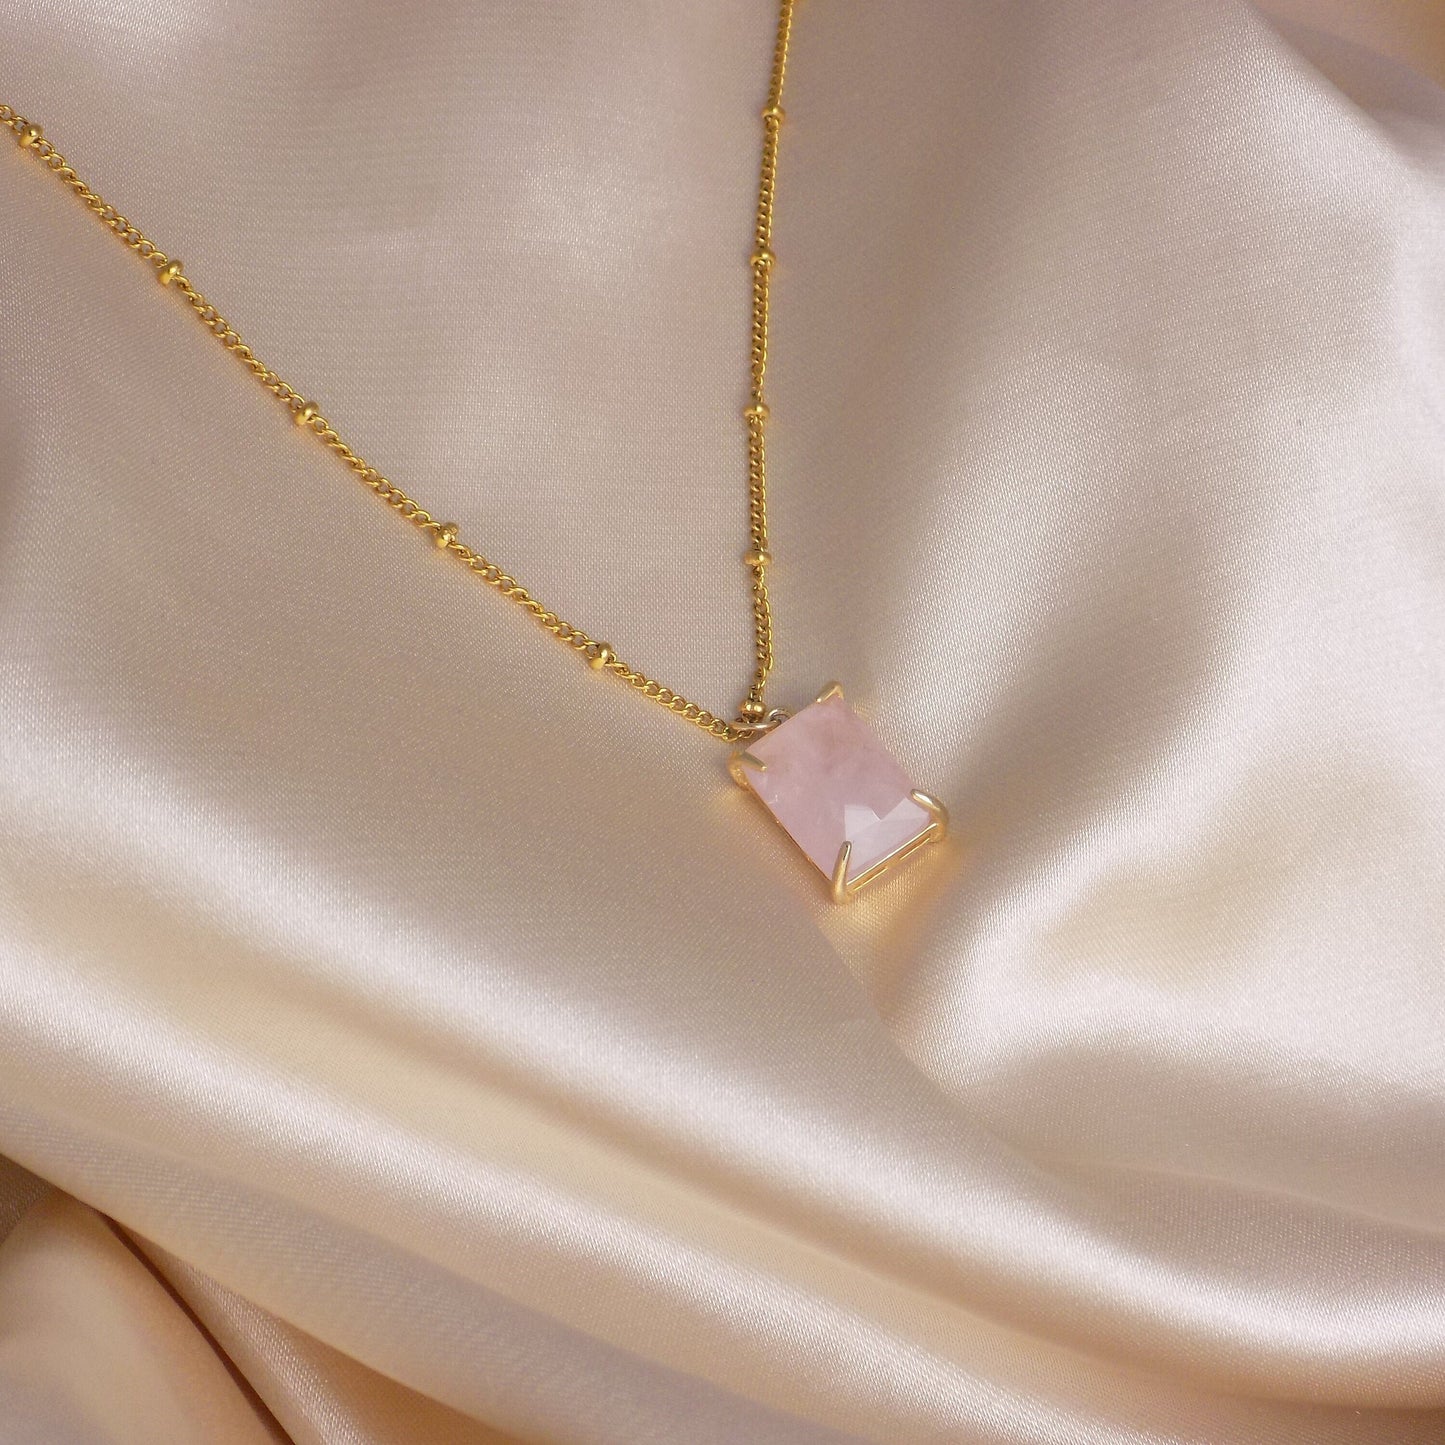 Square Rose Quartz Pendant on Satellite Chain 18K Gold Plated - Stunning Gemstone Jewelry